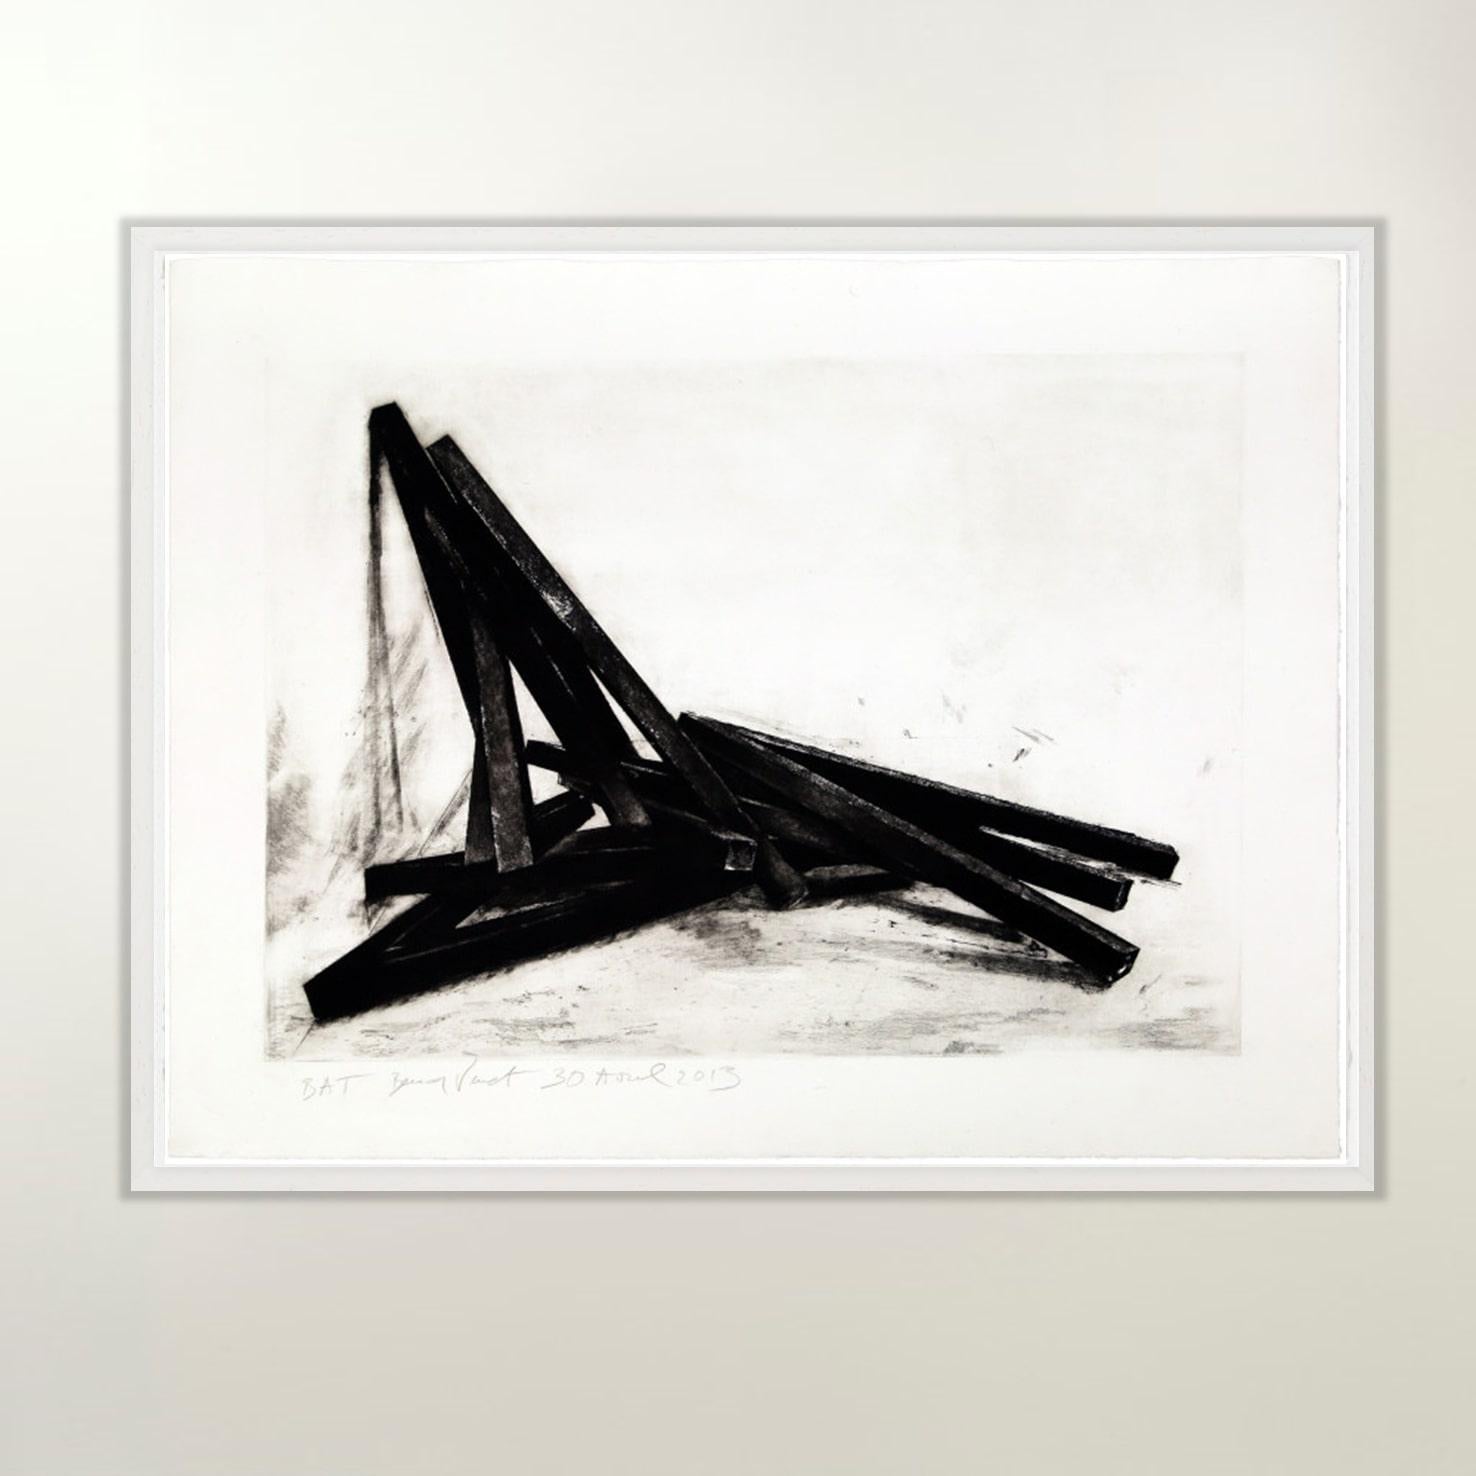 Effondrement - Contemporary, 21st Century, Etching, Black, White, Edition - Print by Bernar Venet